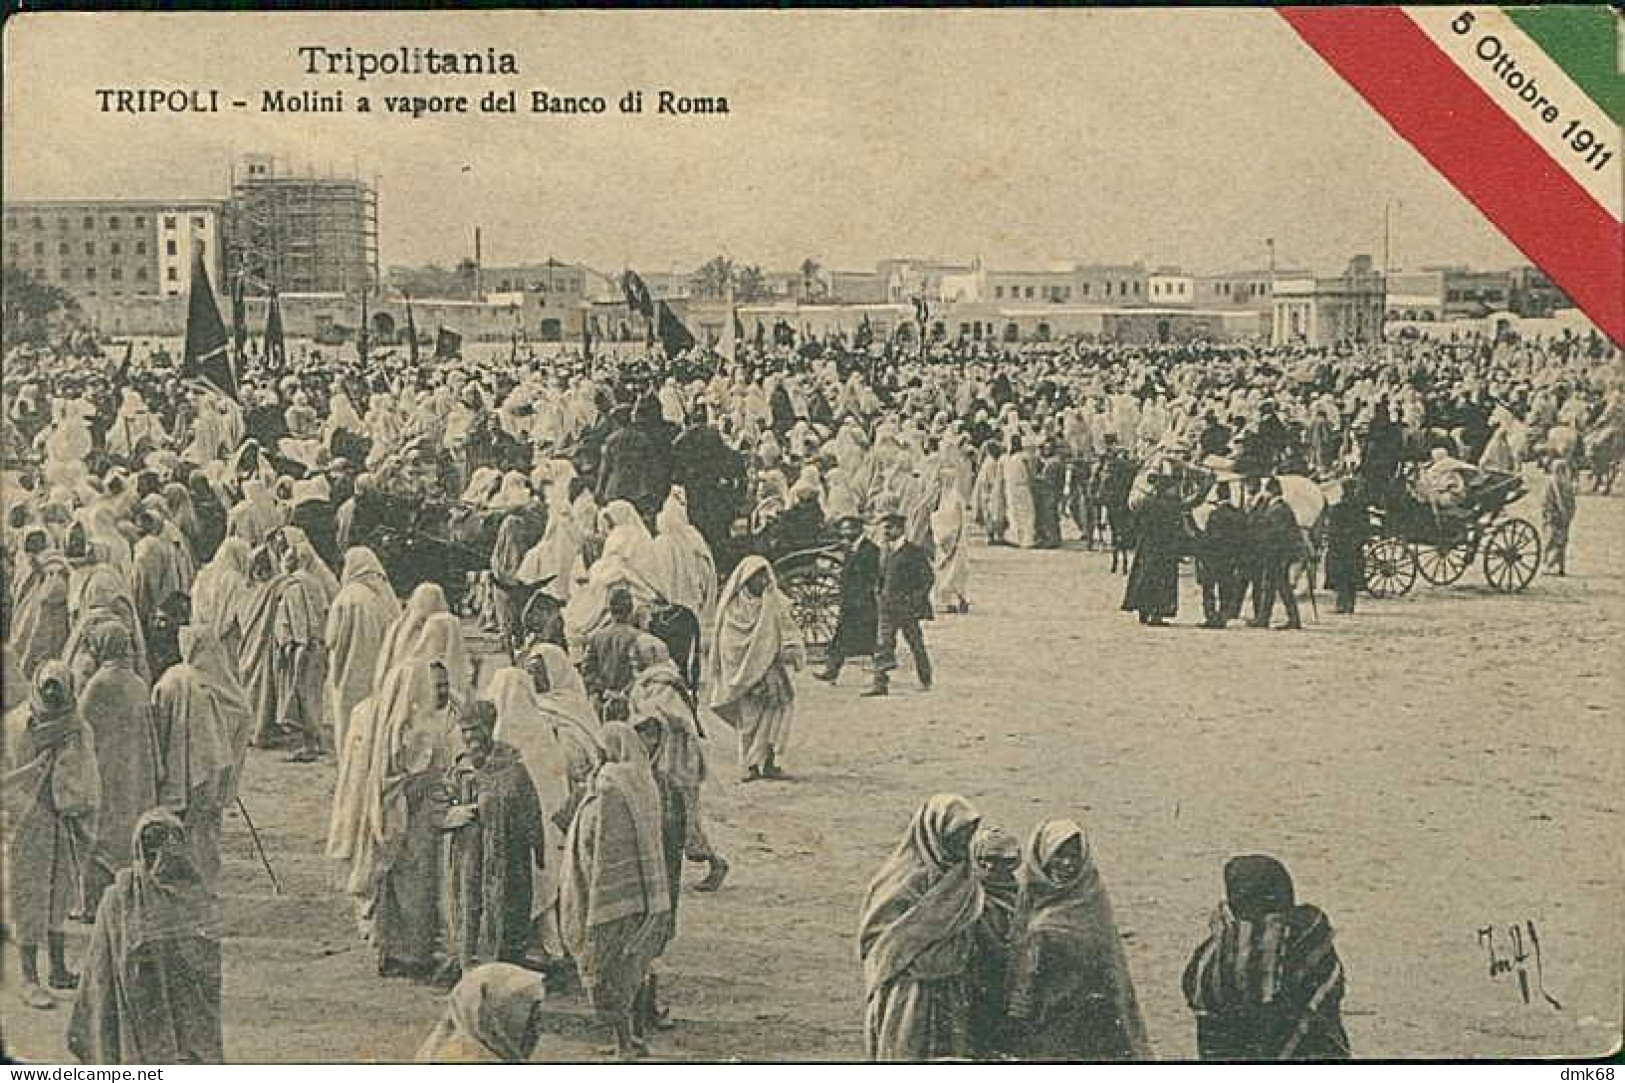 LIBYA / LIBIA - TRIPOLI - MOLINI A VAPORE DEL BANCO DI ROMA - EDIZ. FUMAGALLI - 5 OTT. 1911 (12487/2) - Libye